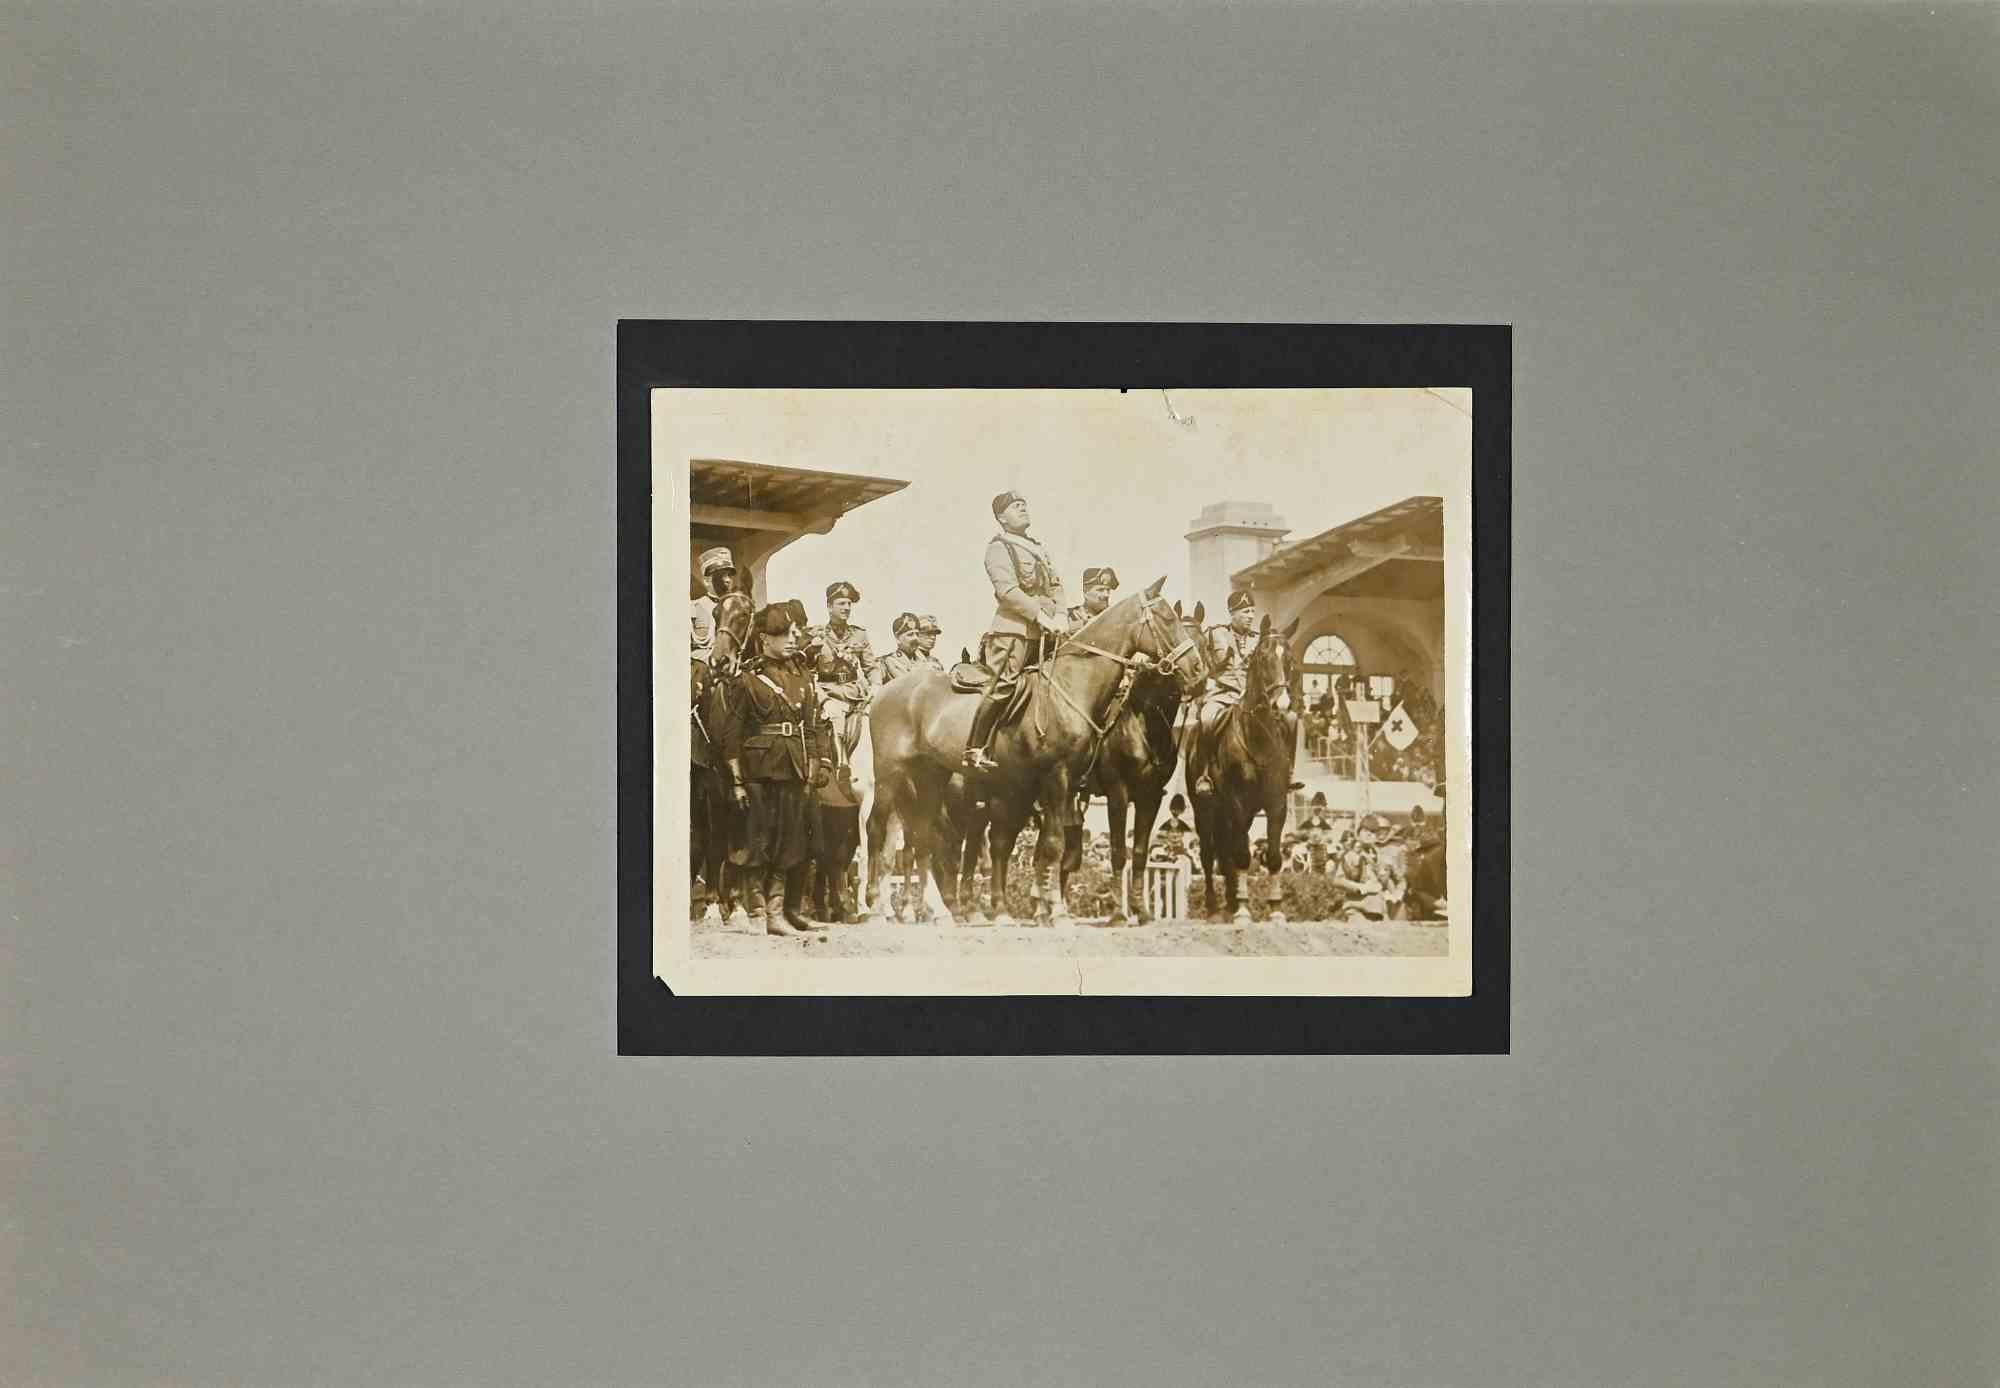 Unknown Figurative Photograph - Portrait of Benito Mussolini Riding a Horse - Vintage Photo - 1930s